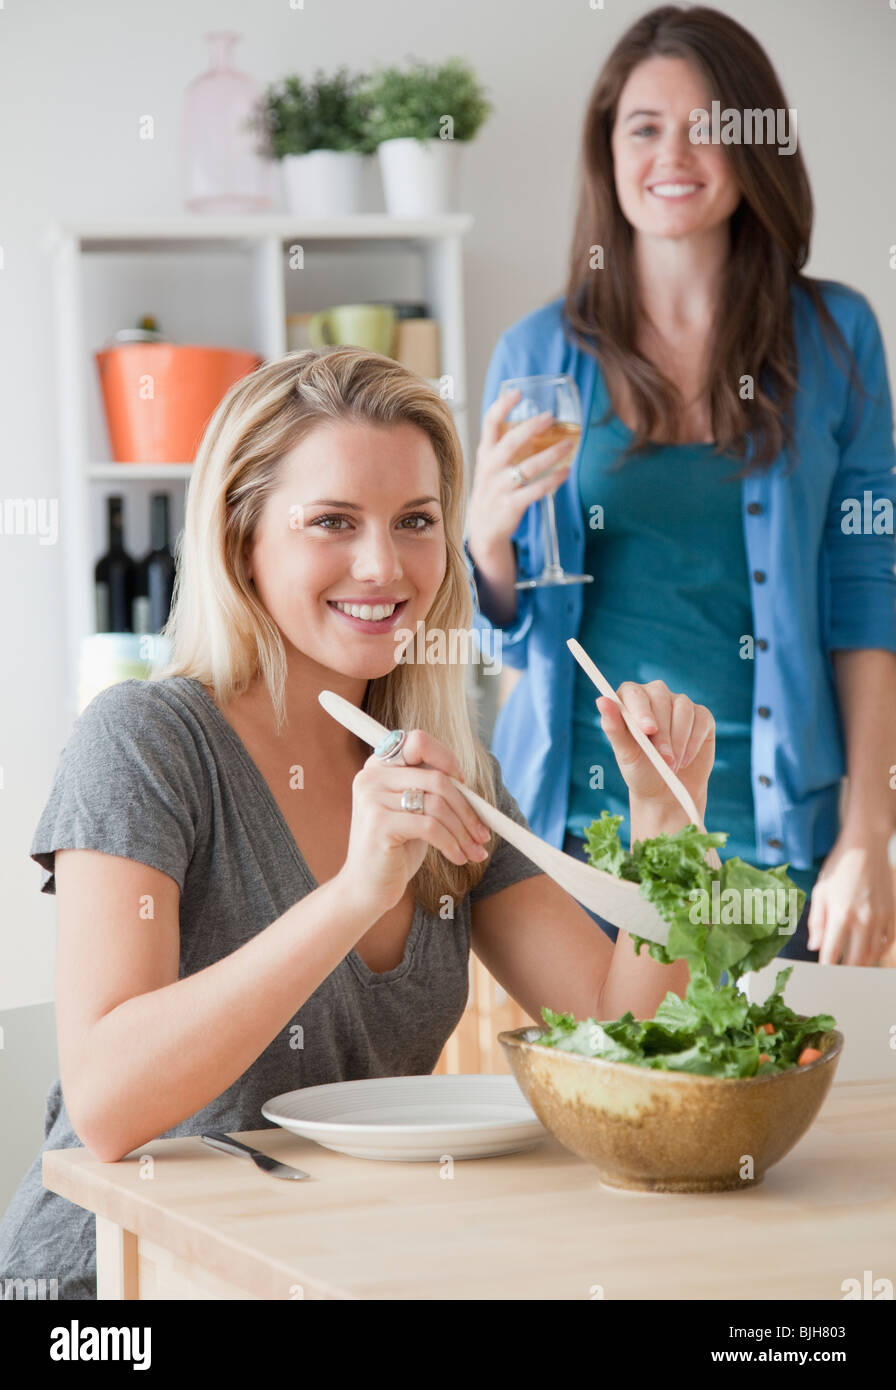 Woman serving salad Stock Photo